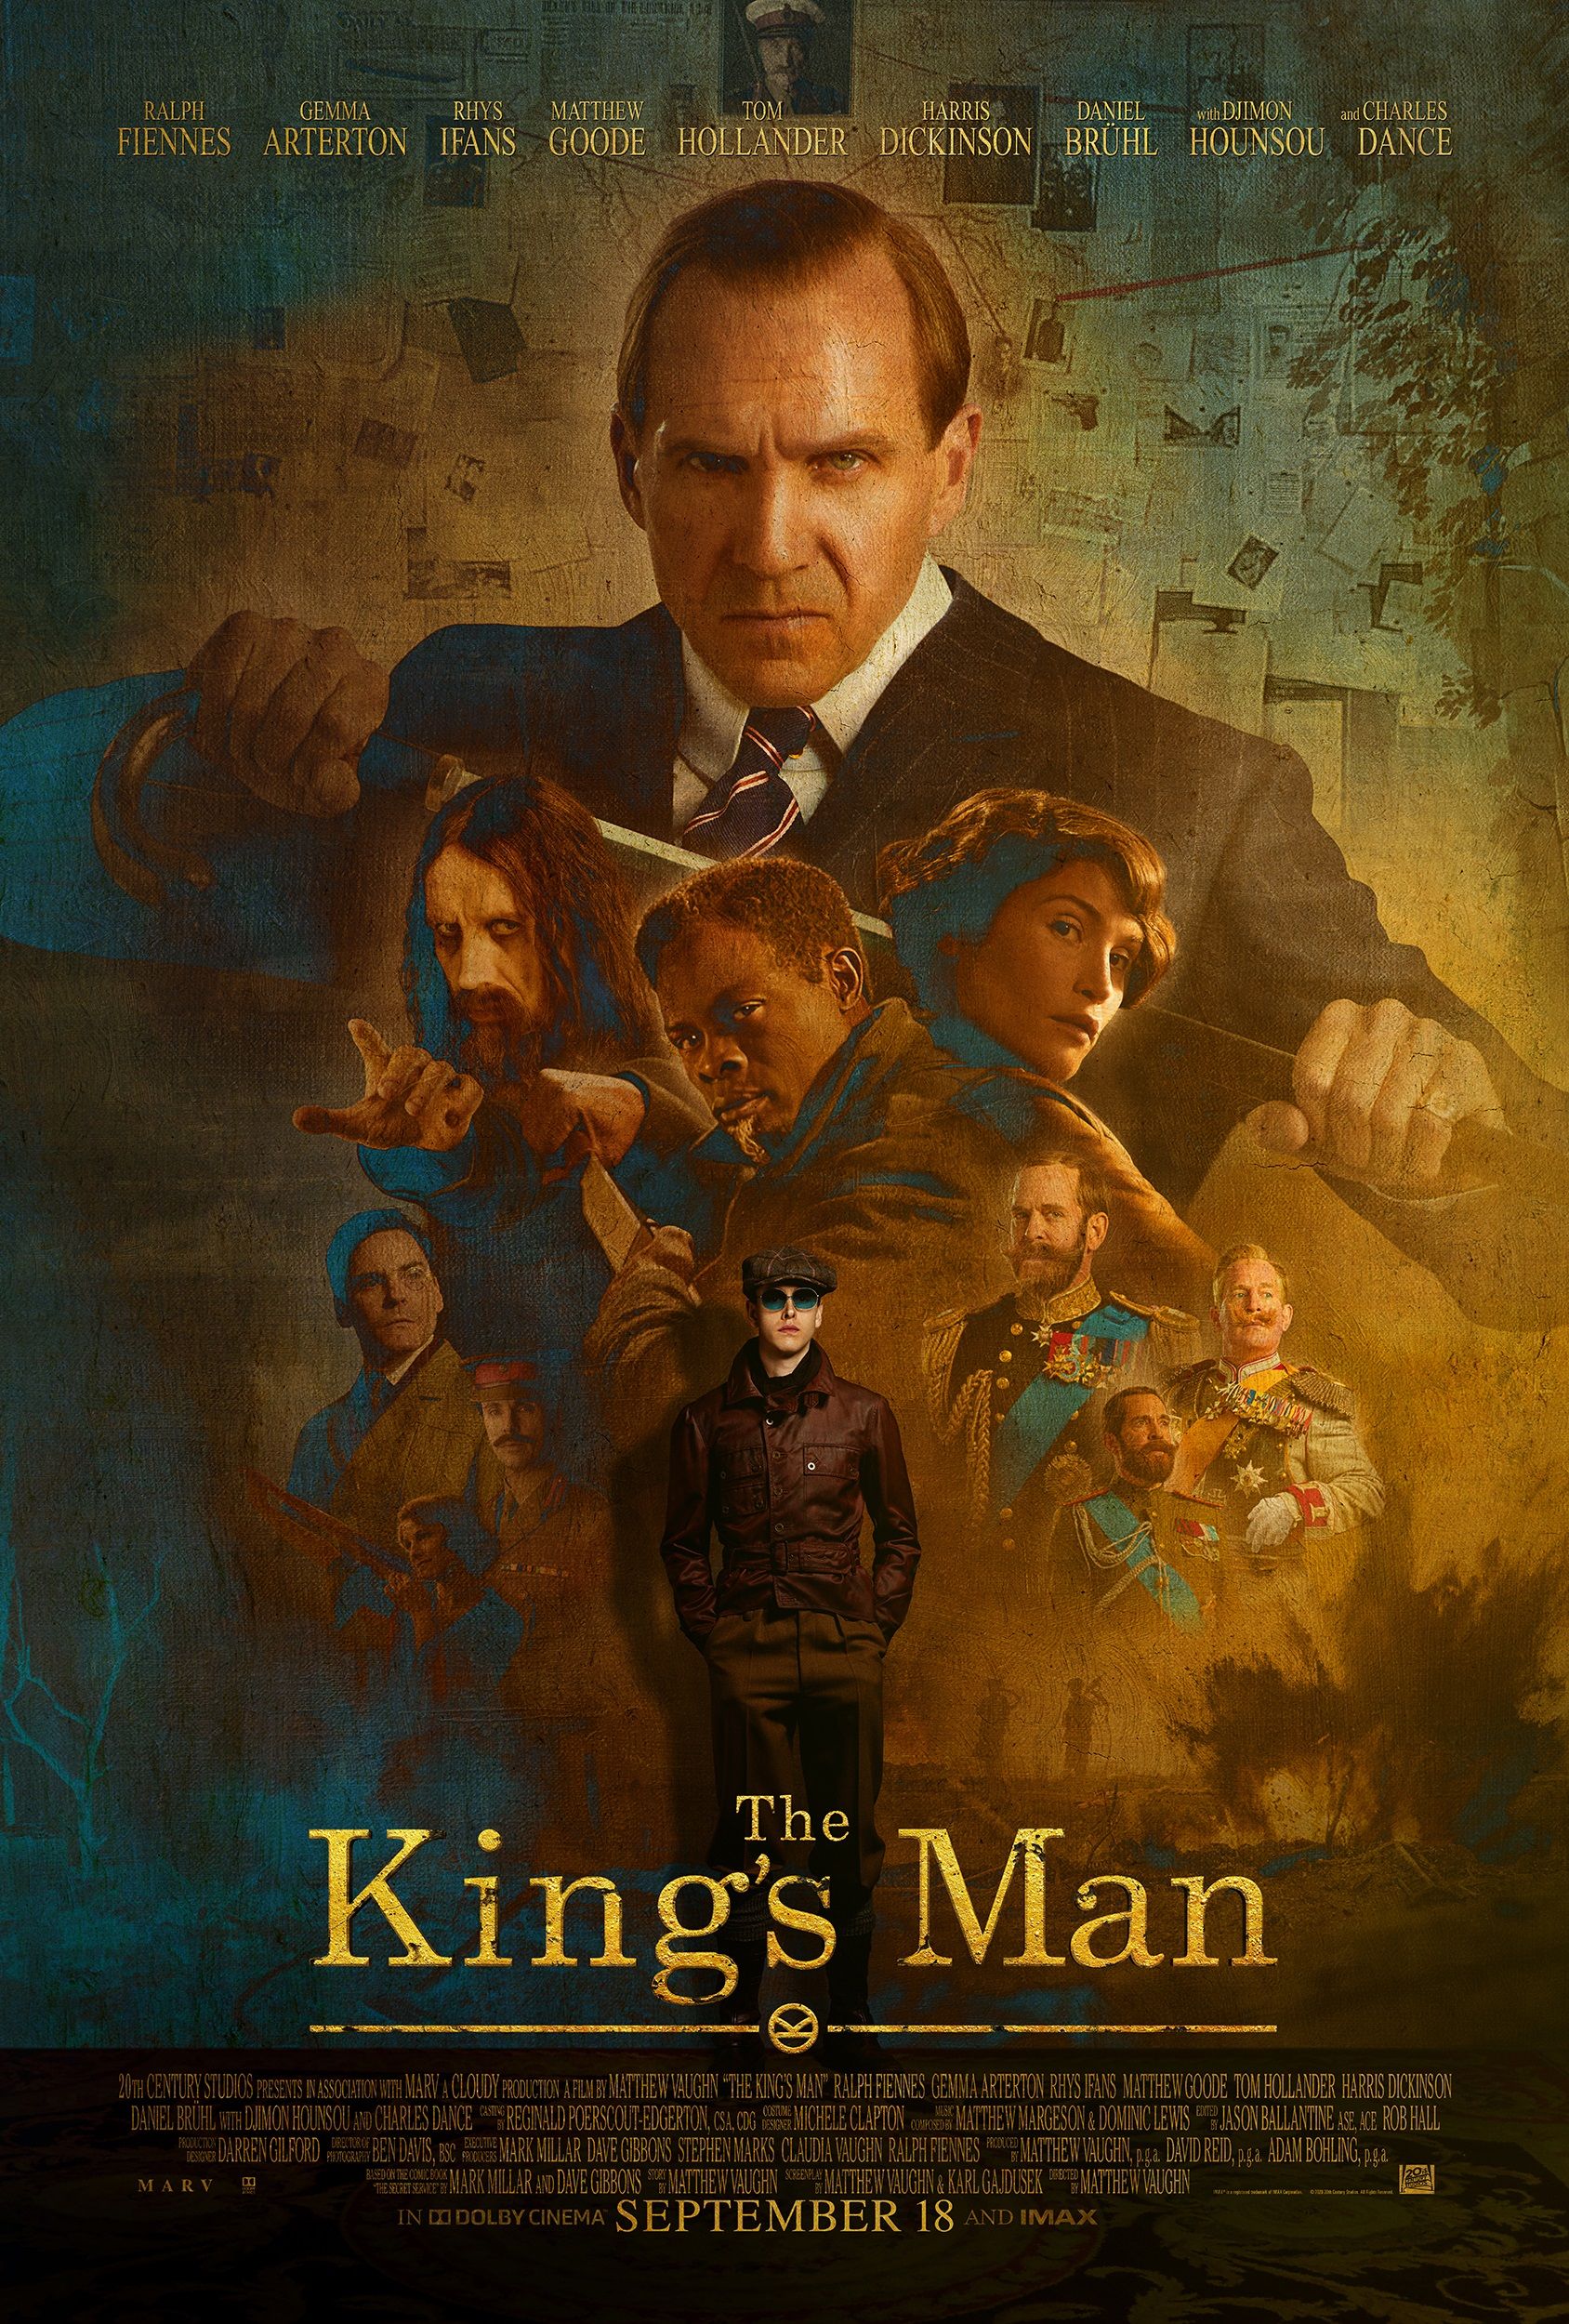 Breakdown Trailer: The King's Man (2021) Halaman 1 - Kompasiana.com